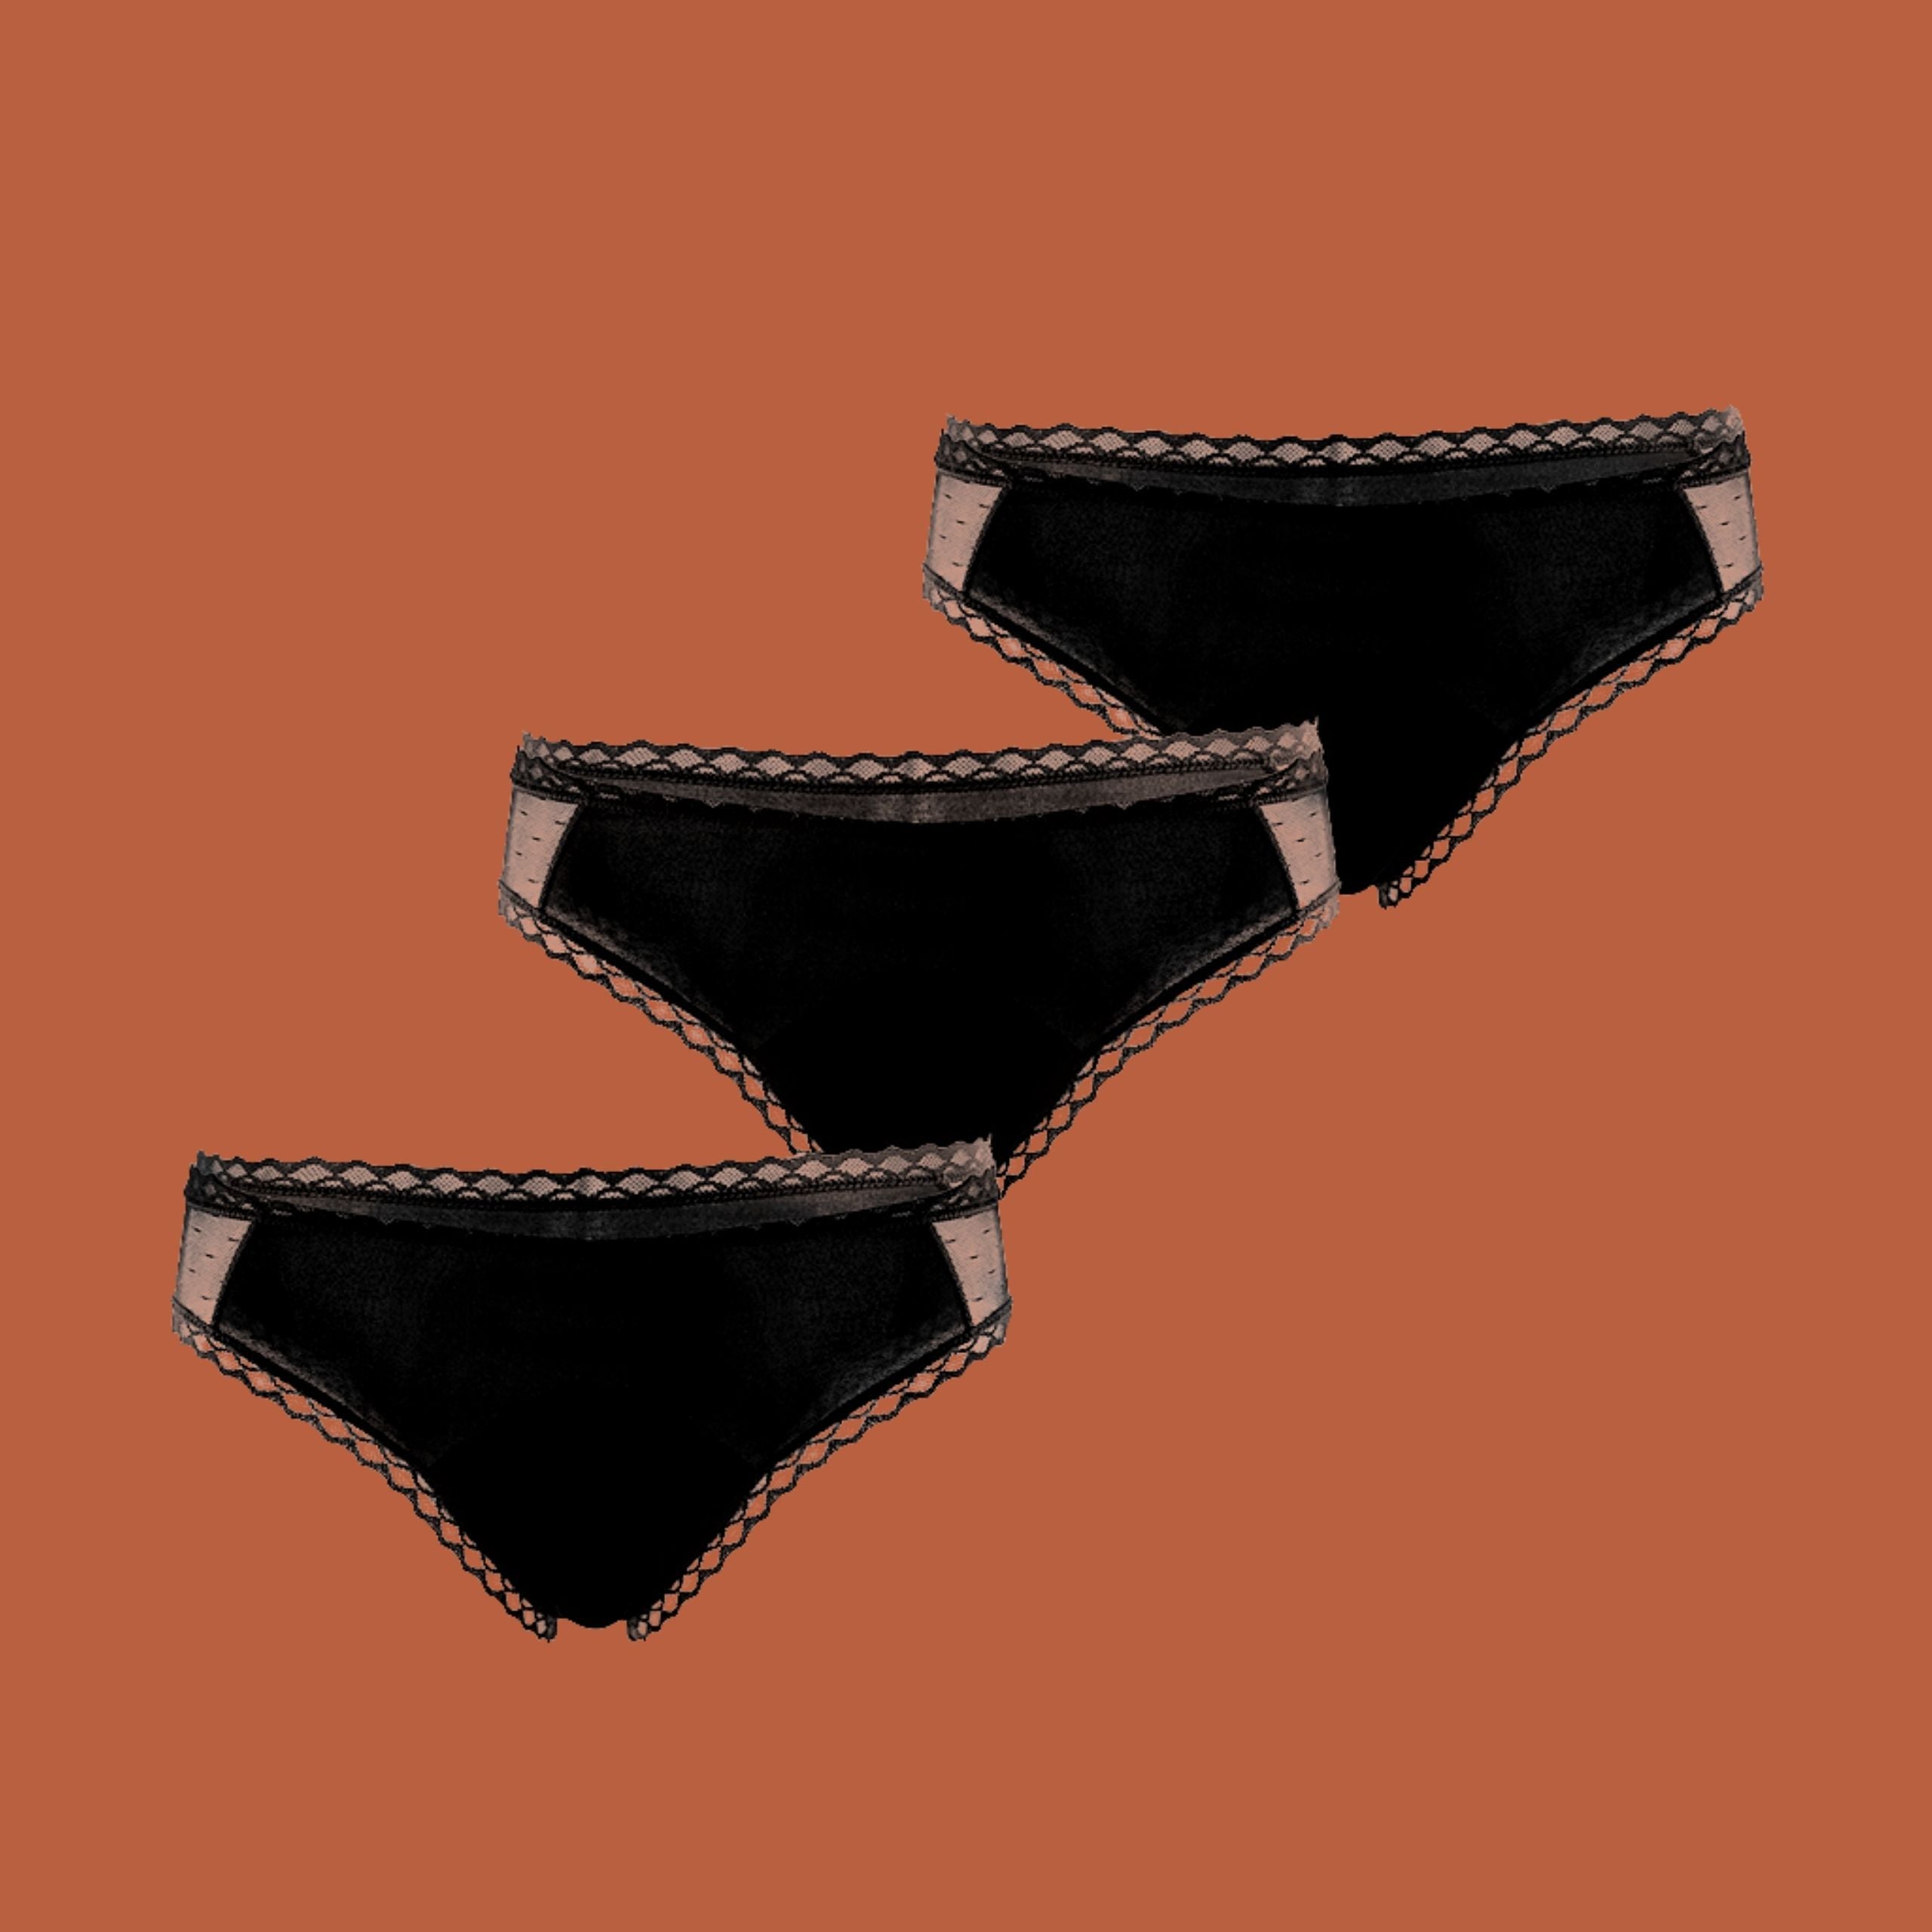 Peony Bikini Period Underwear Bundle - for all-day wear and